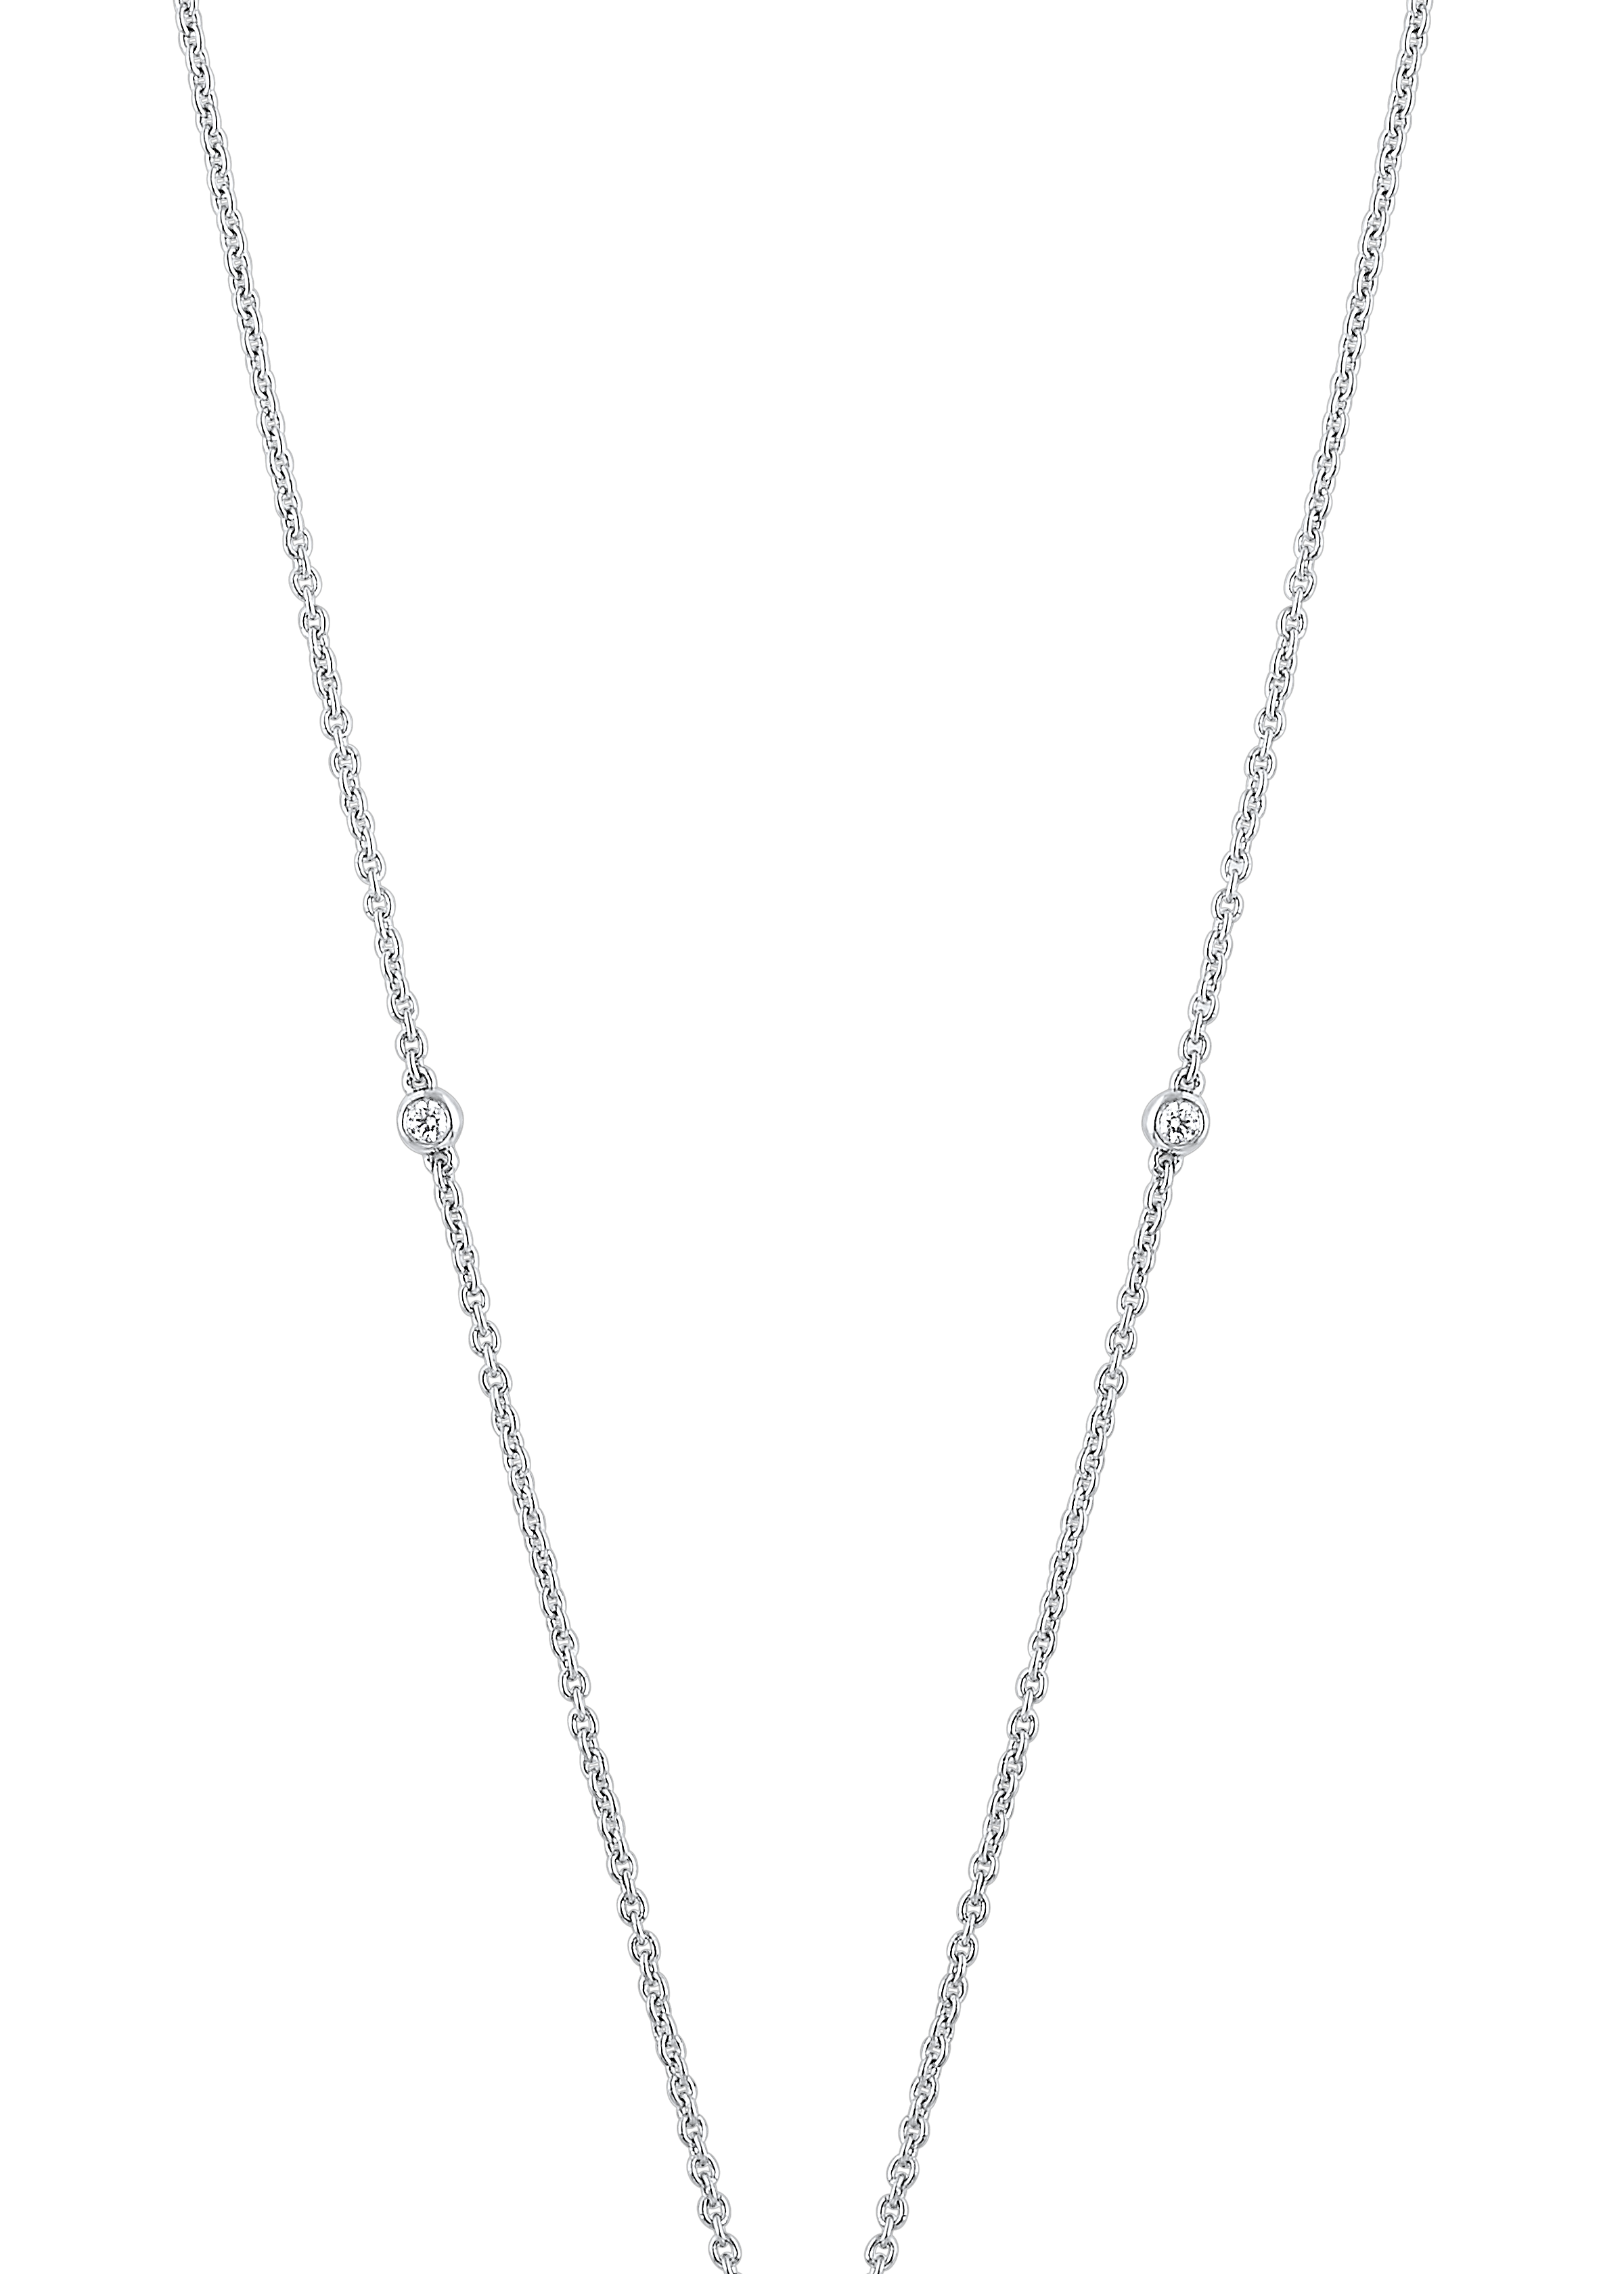 BW James Jewelers Pendant 16 Page Christmas Catalog Offer 14K Diamond Pendants 1/4 ctw